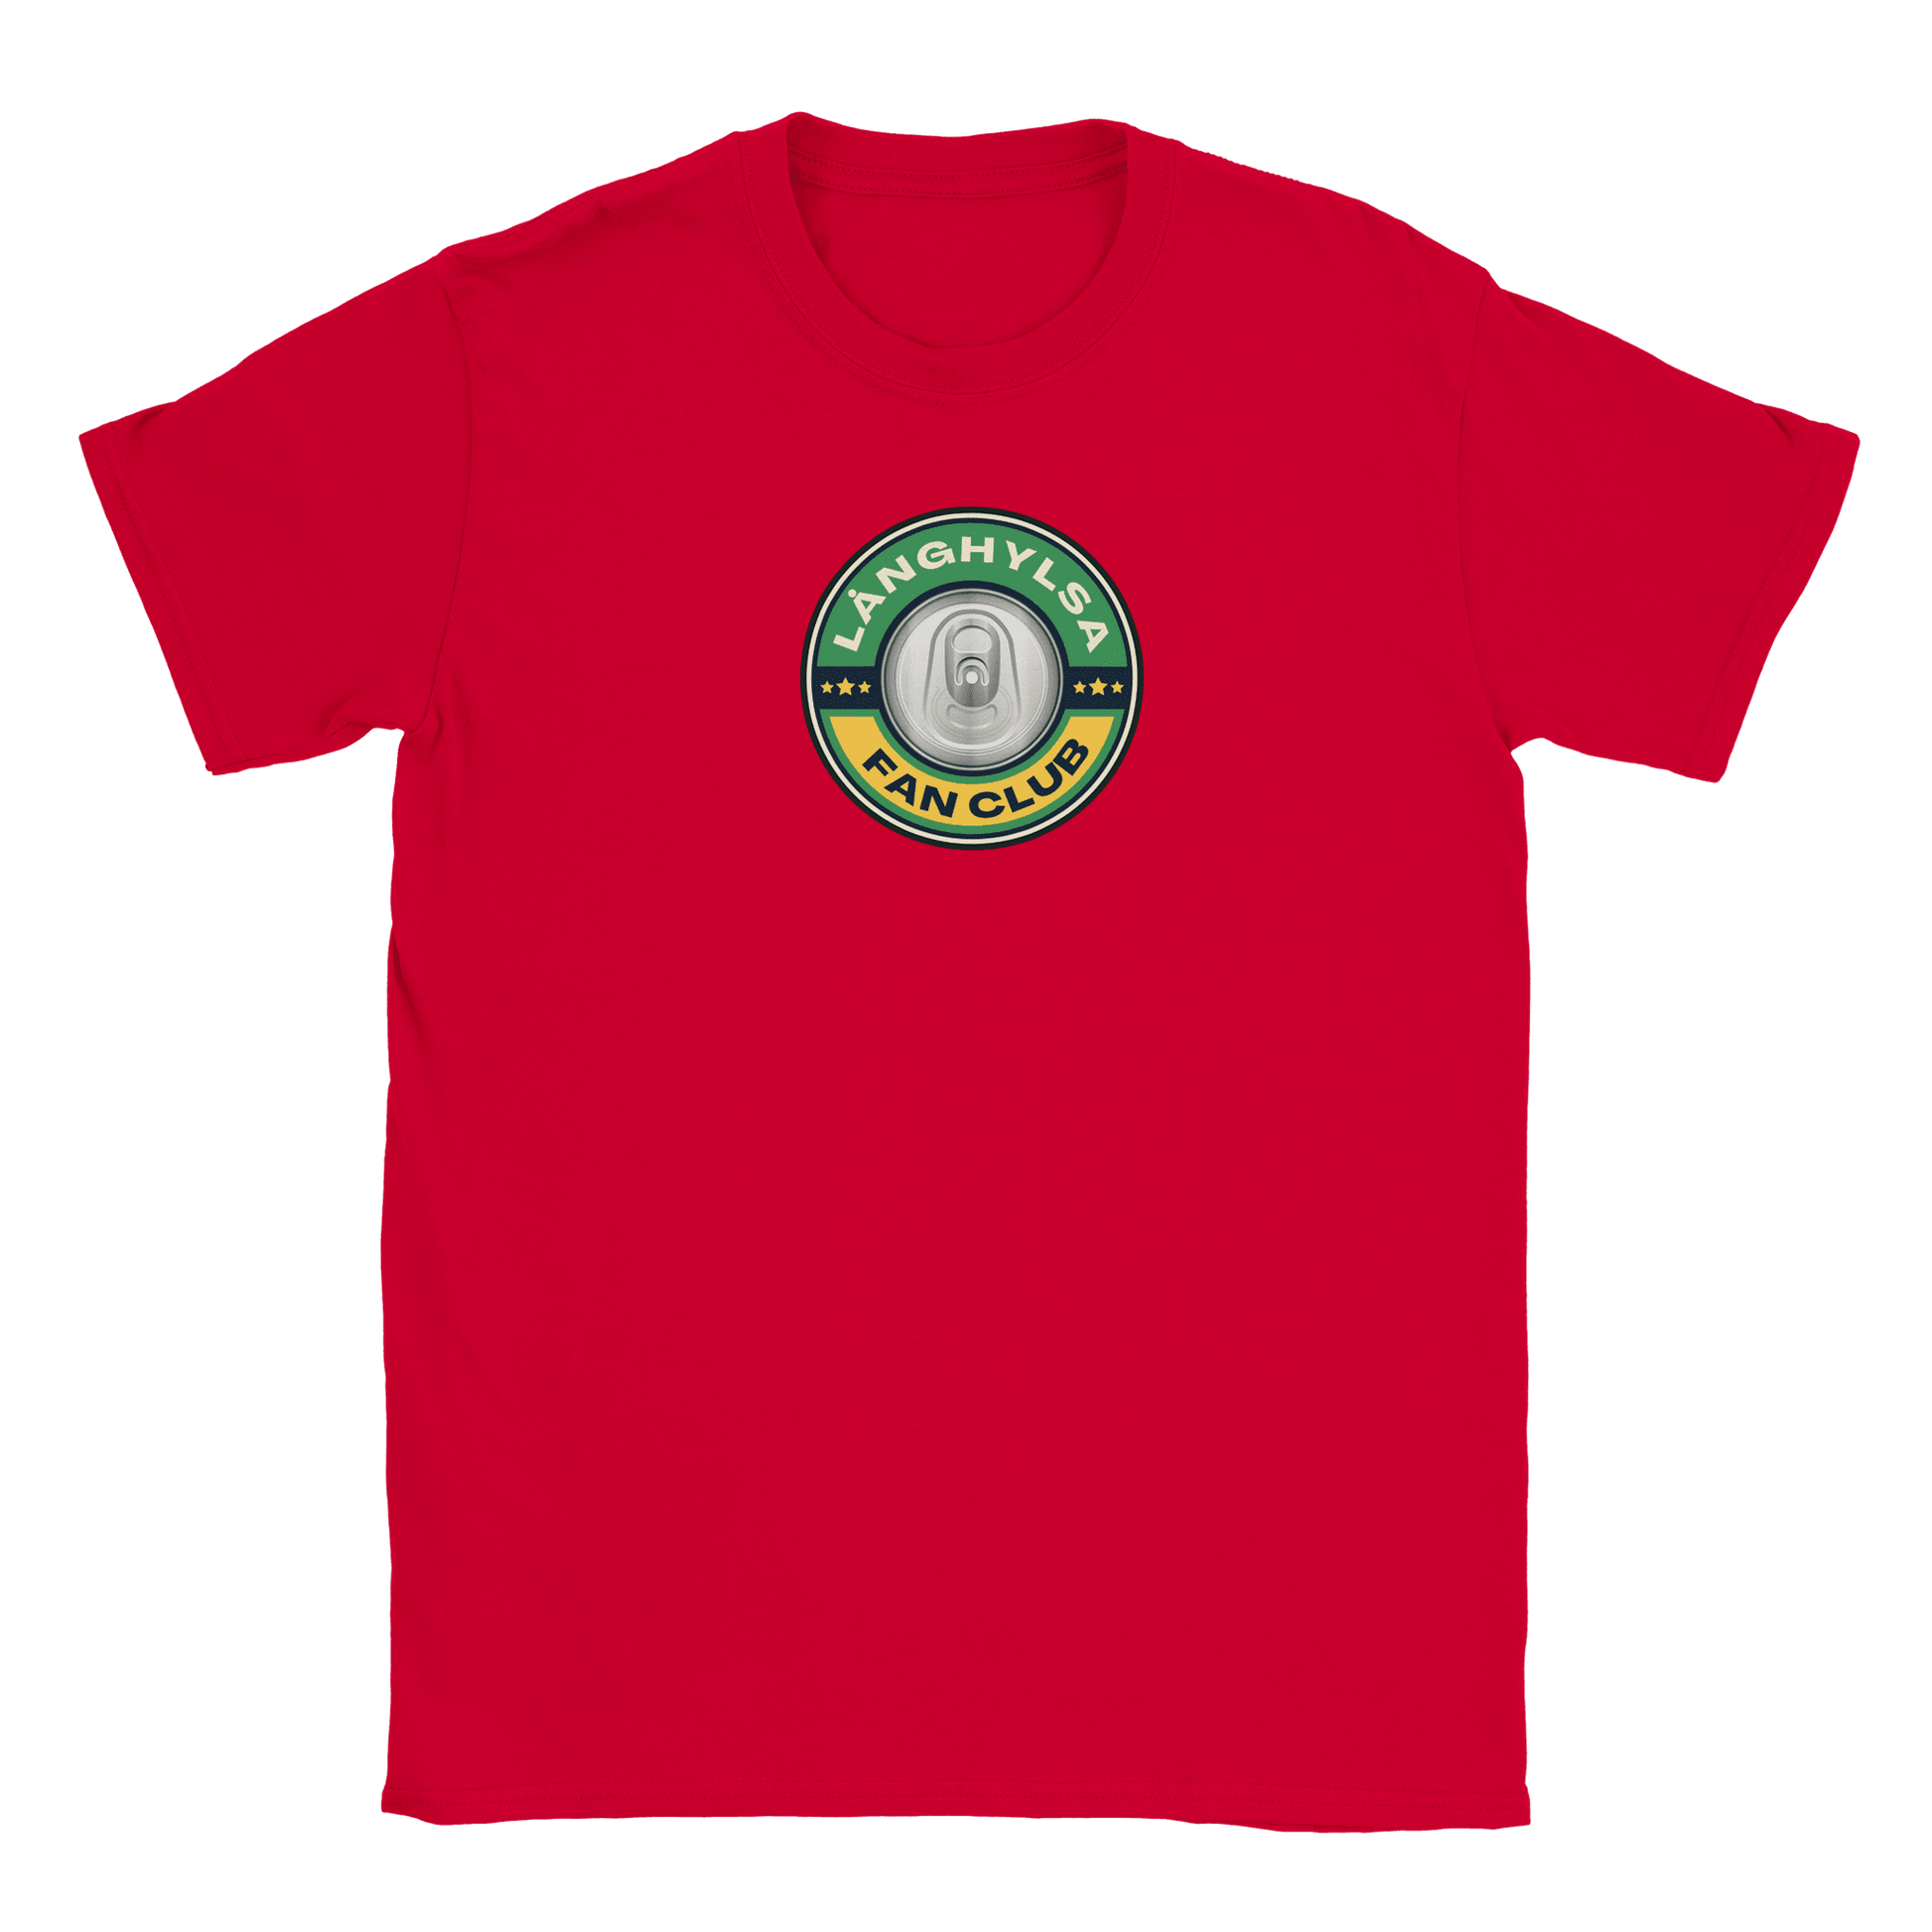 Långhylsa Fan Club - T-shirt Röd